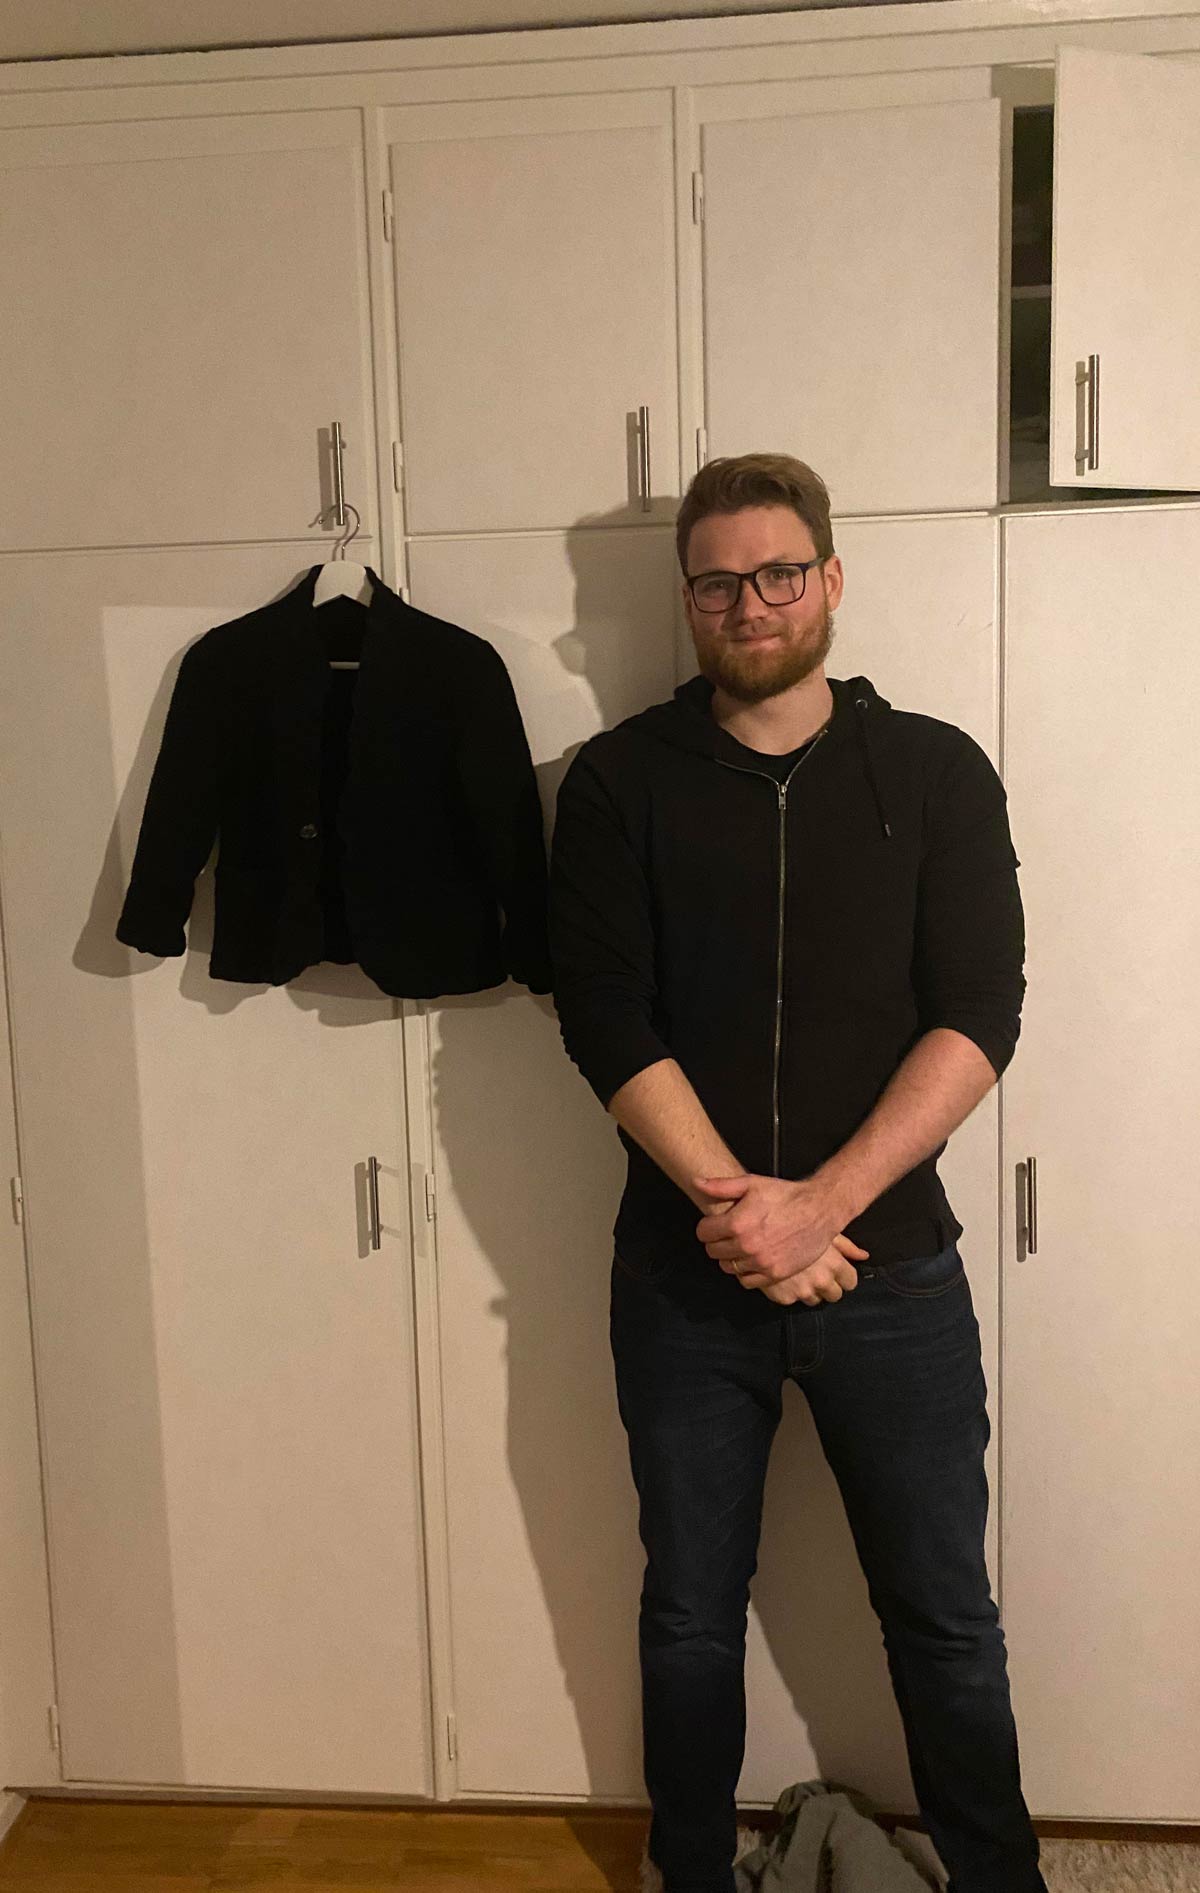 I’ve accidentally shrunk my husband's jacket. Husband for scale